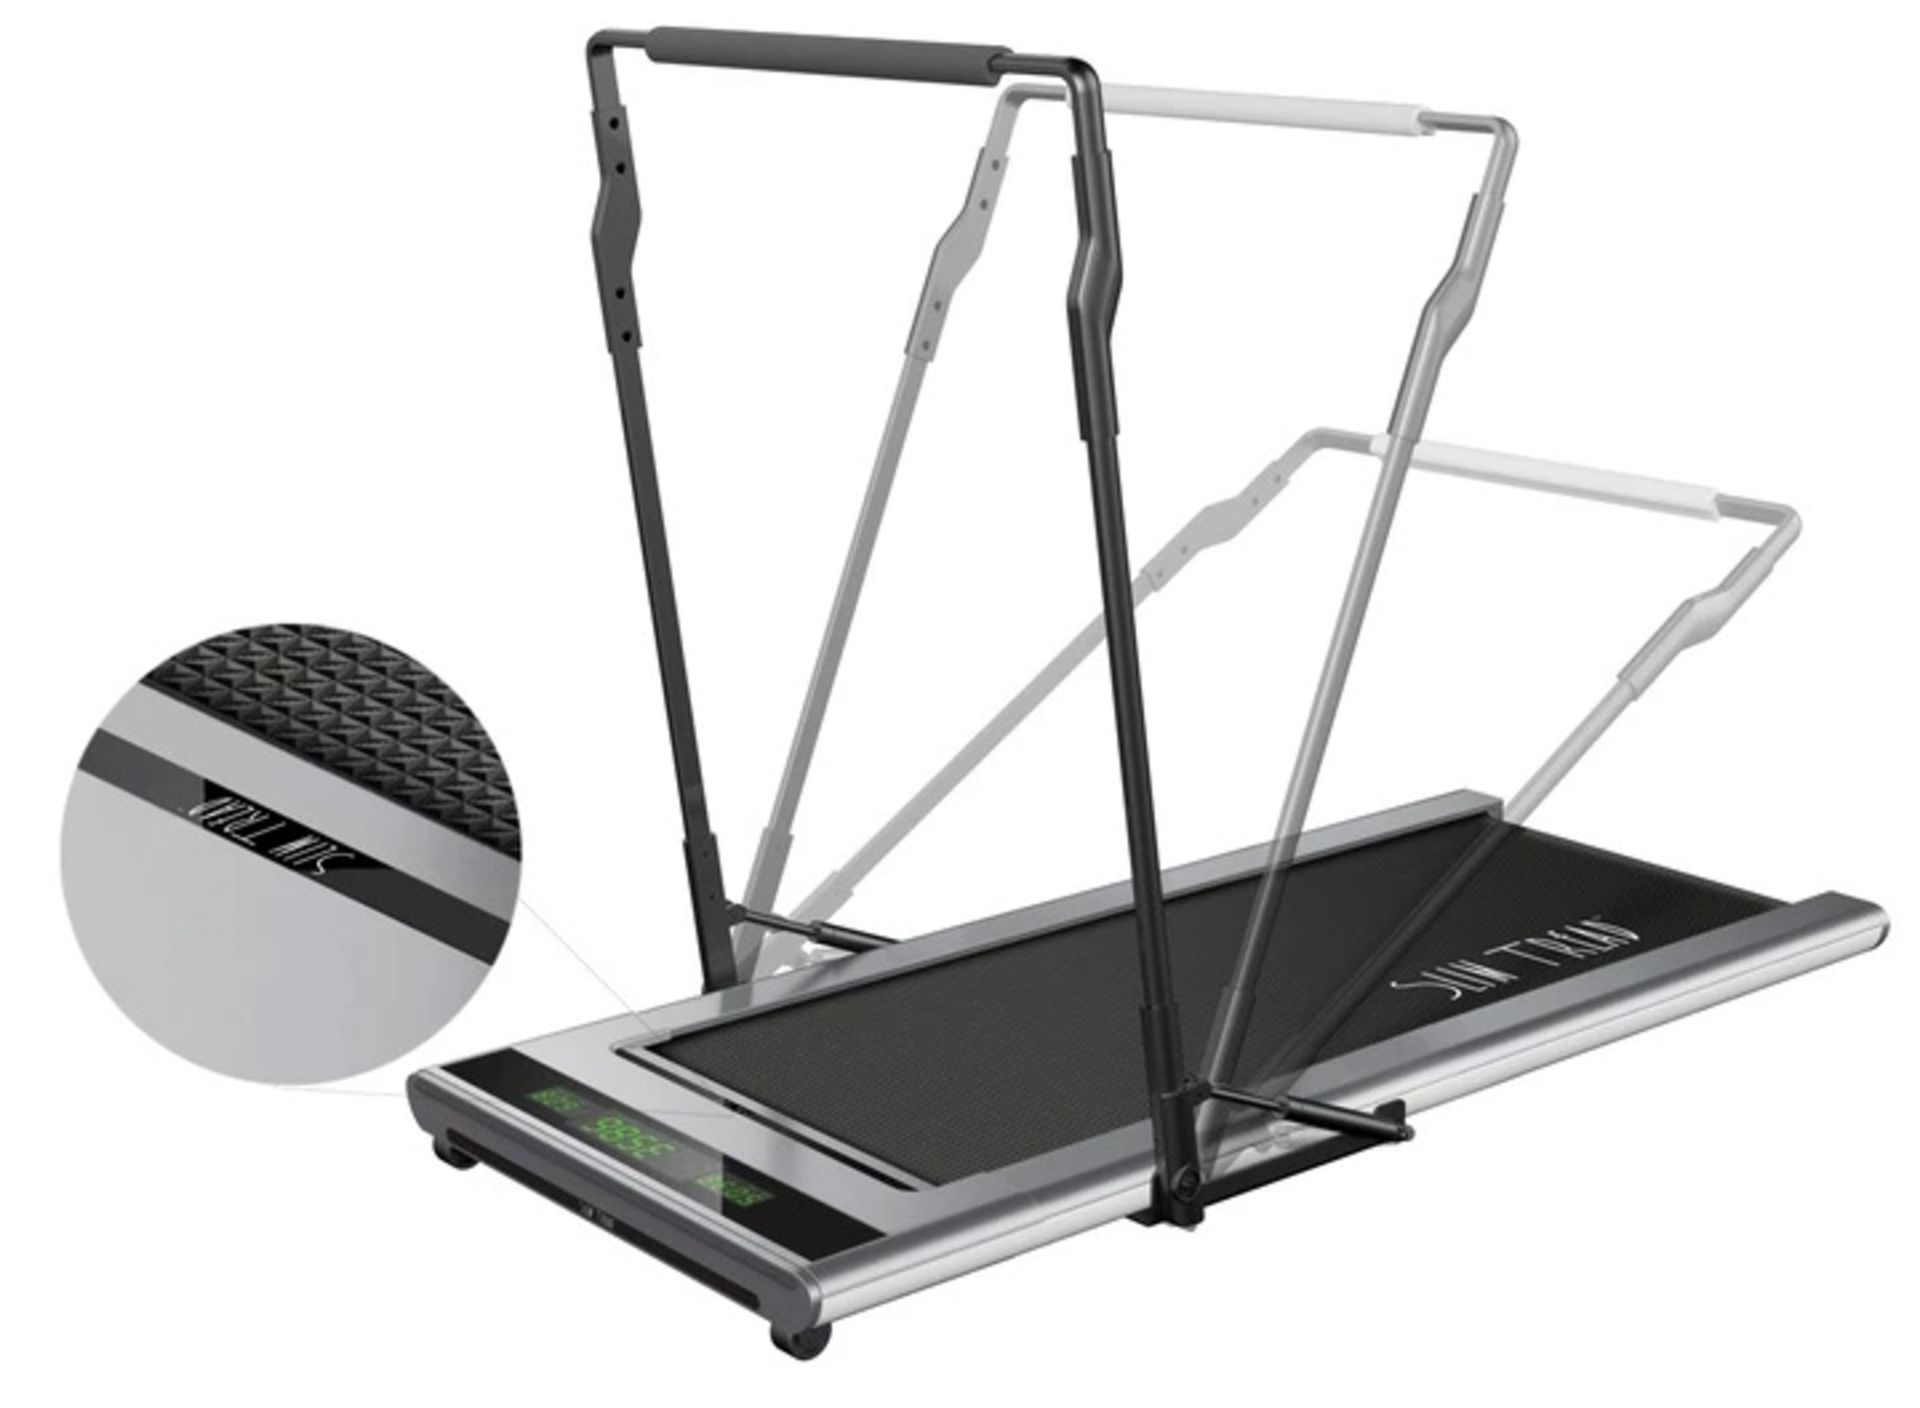 1 x Slim Tread Ultra Thin Smart Treadmill Running Machine - Brand New Sealed Stock - RRP £799! - Image 11 of 13